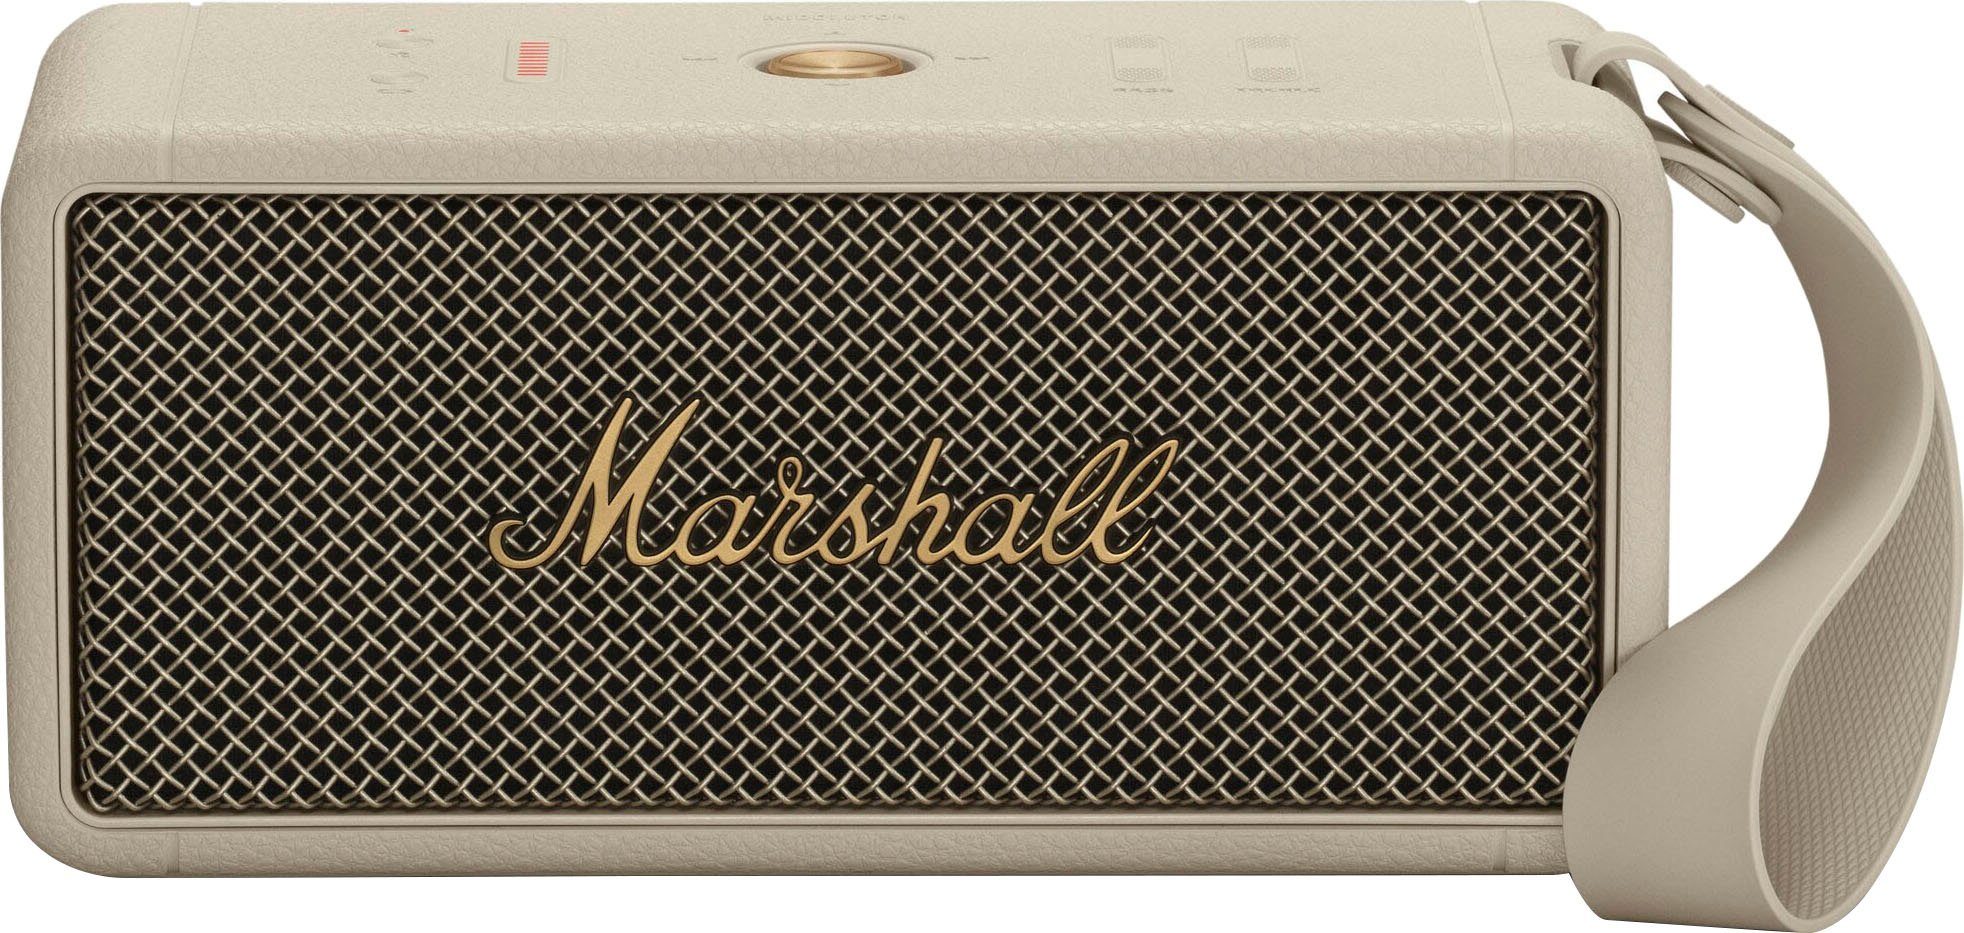 Marshall Middleton 110 W) Cream Lautsprecher Stereo (Bluetooth